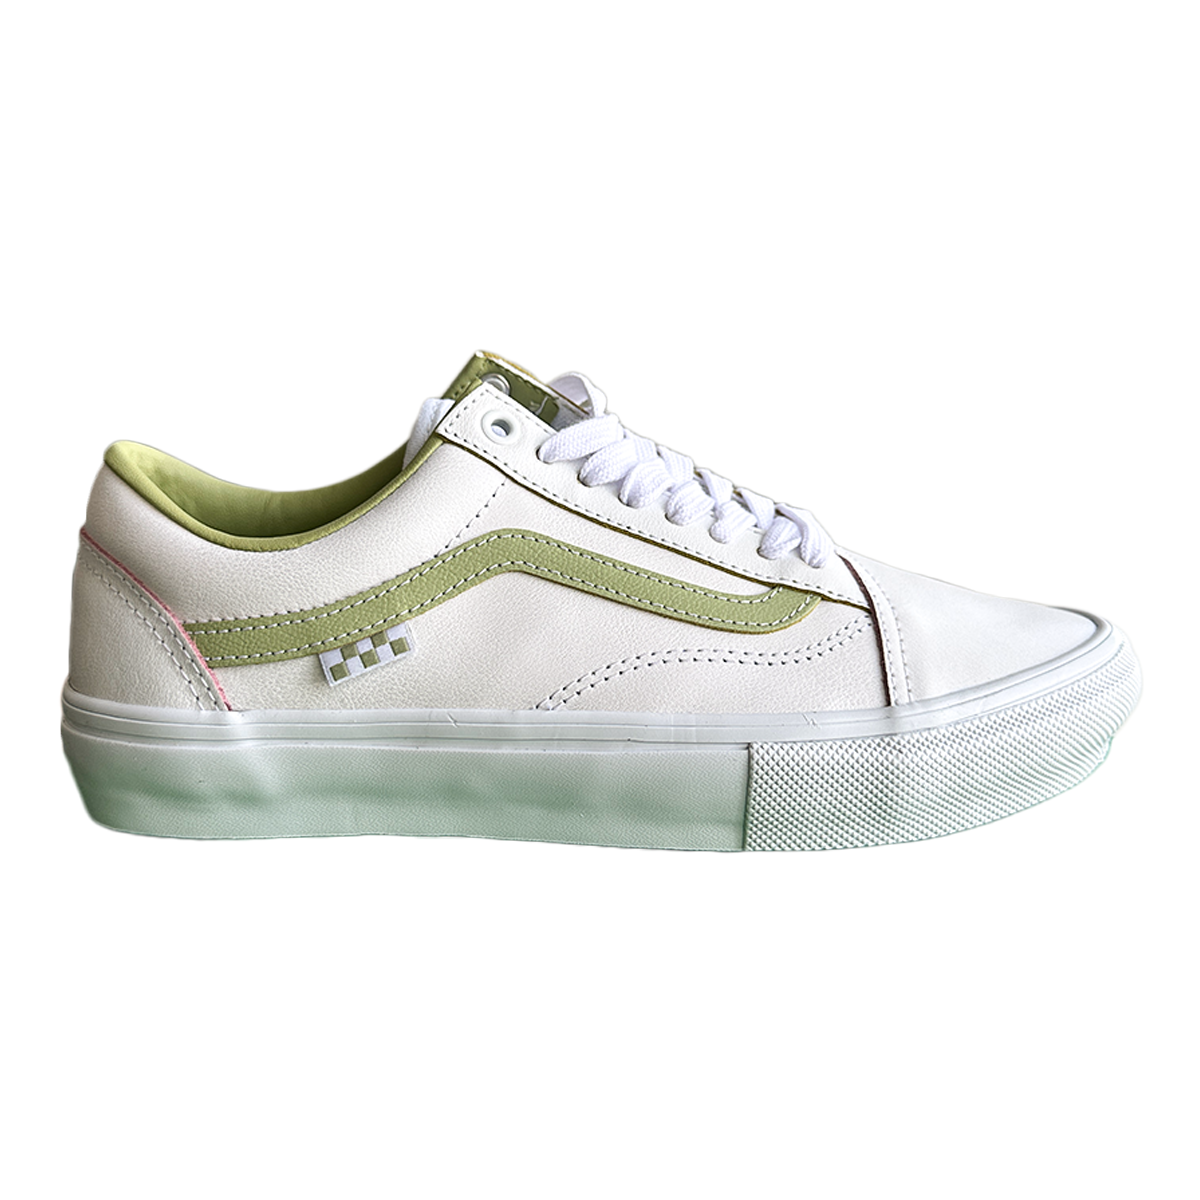 Vans Skate Old Skool Shoe - Wear Away Mint / White